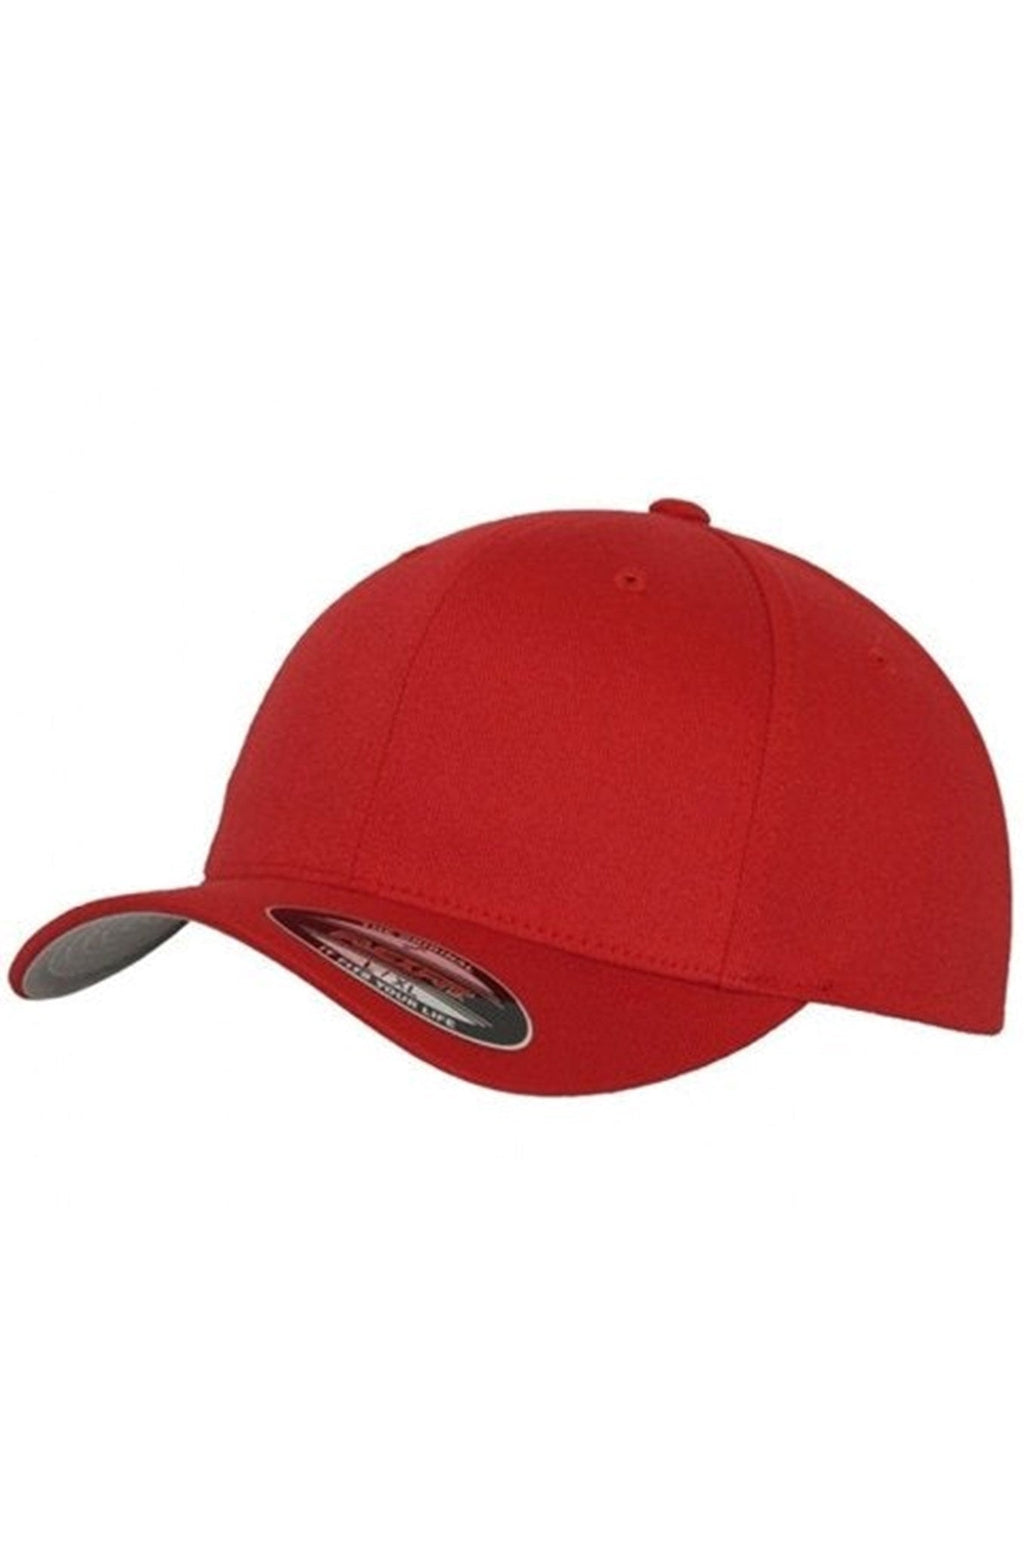 FlexFit原始棒球帽 - 红色